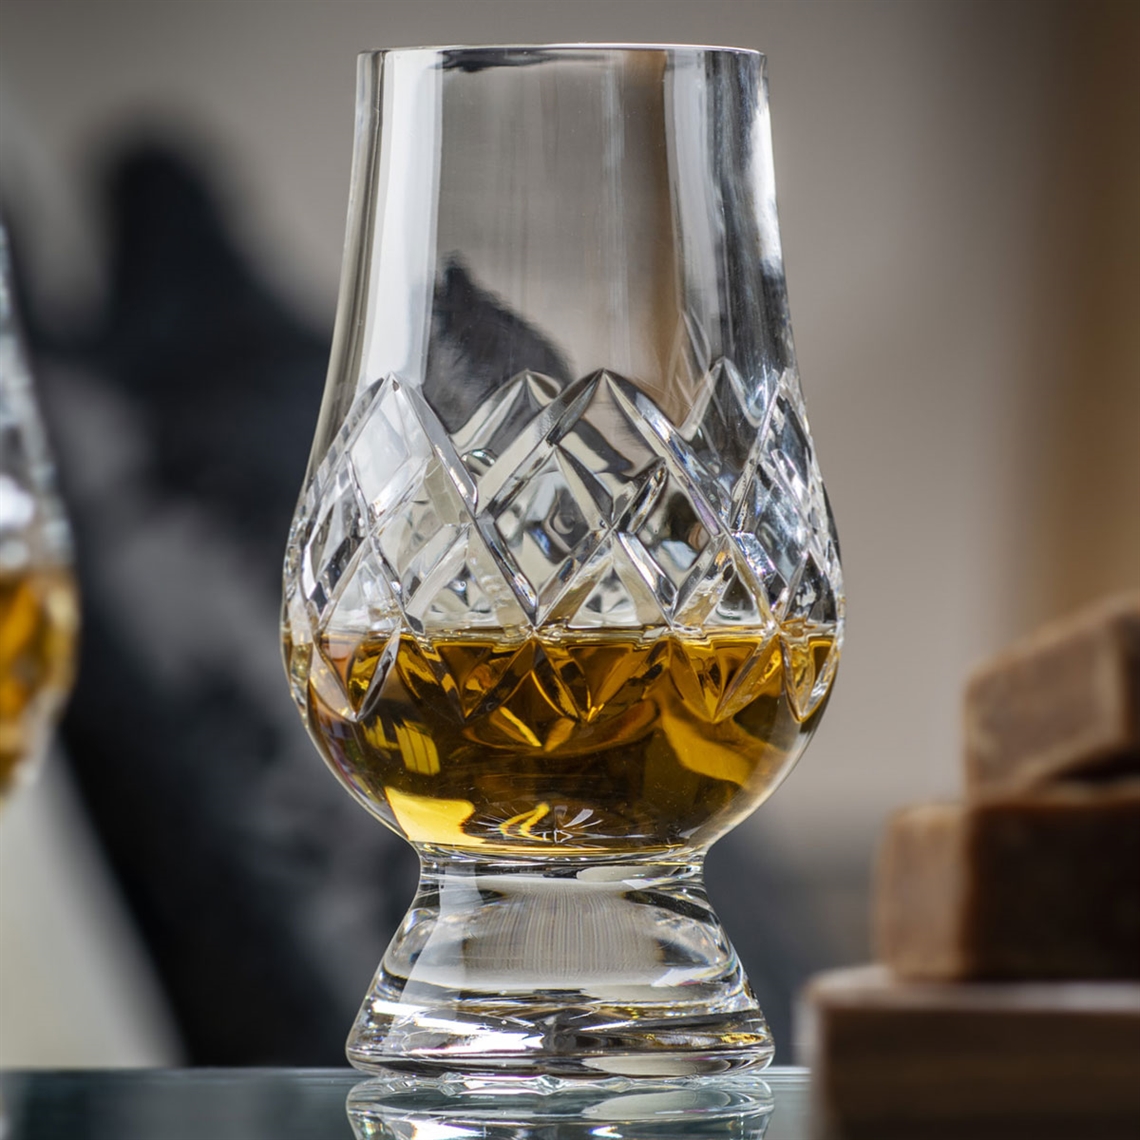 The Glencairn Official Cut Crystal Whisky Glass